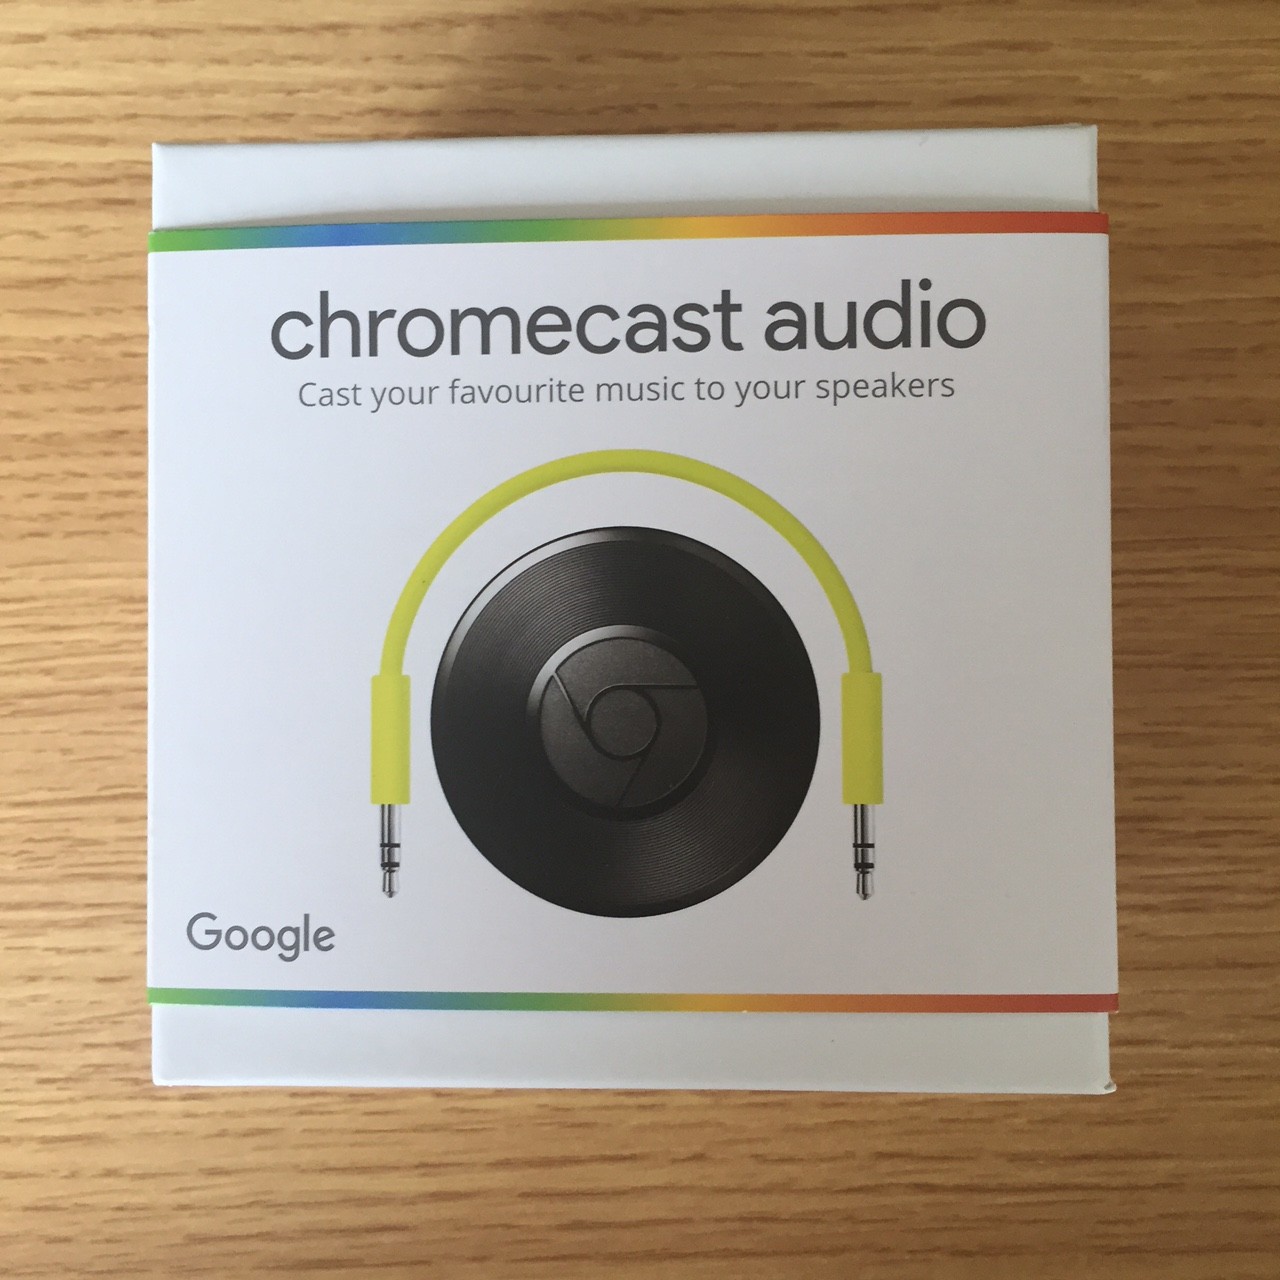 Google Chromecast audio